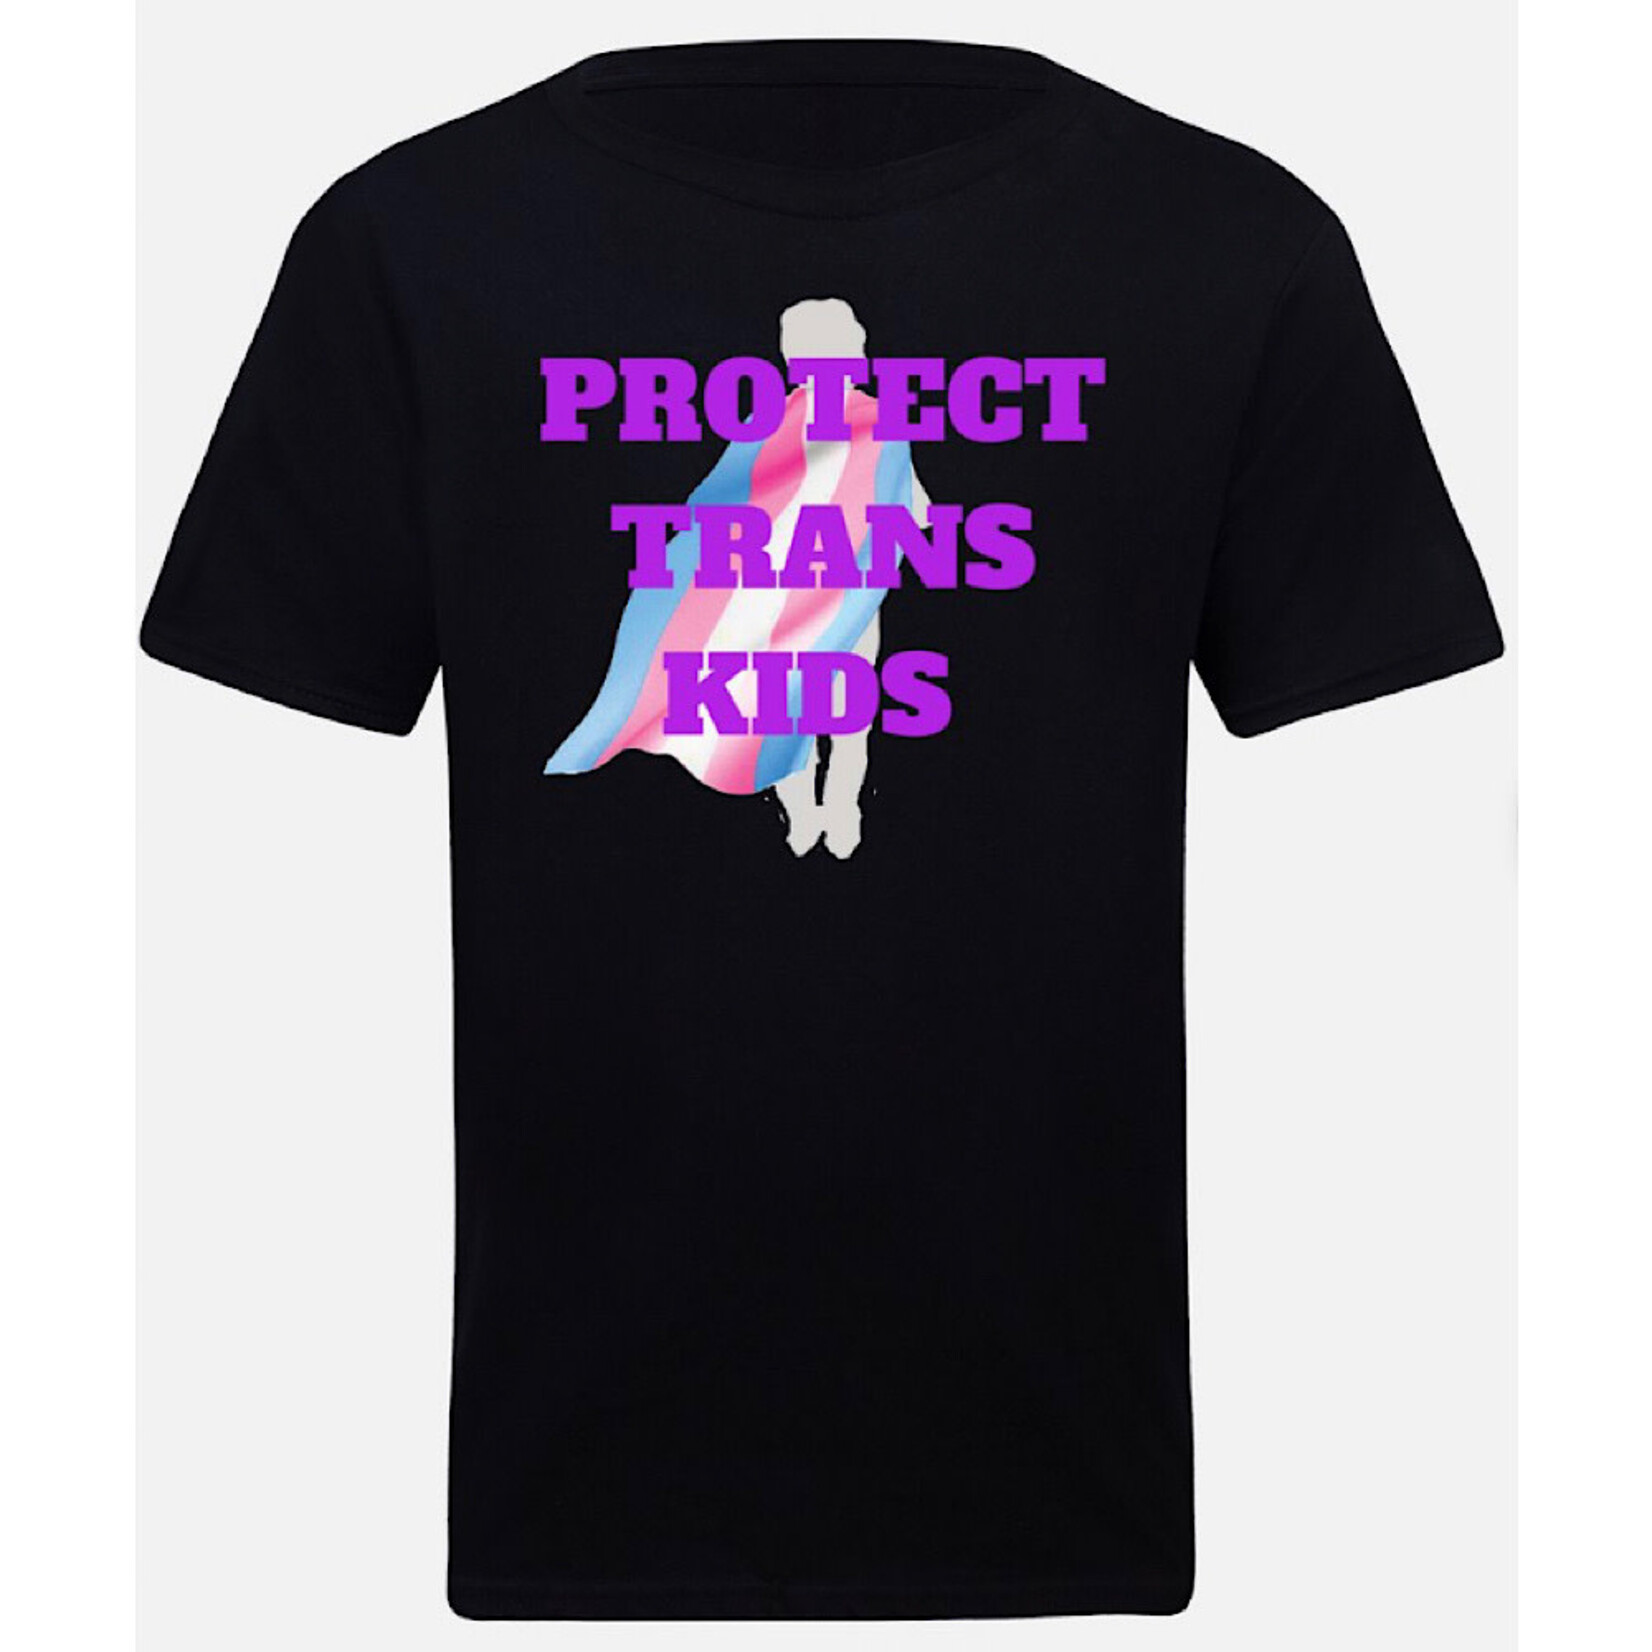 Bad Annie’s T-Shirt - Protect Trans Kids (Black)